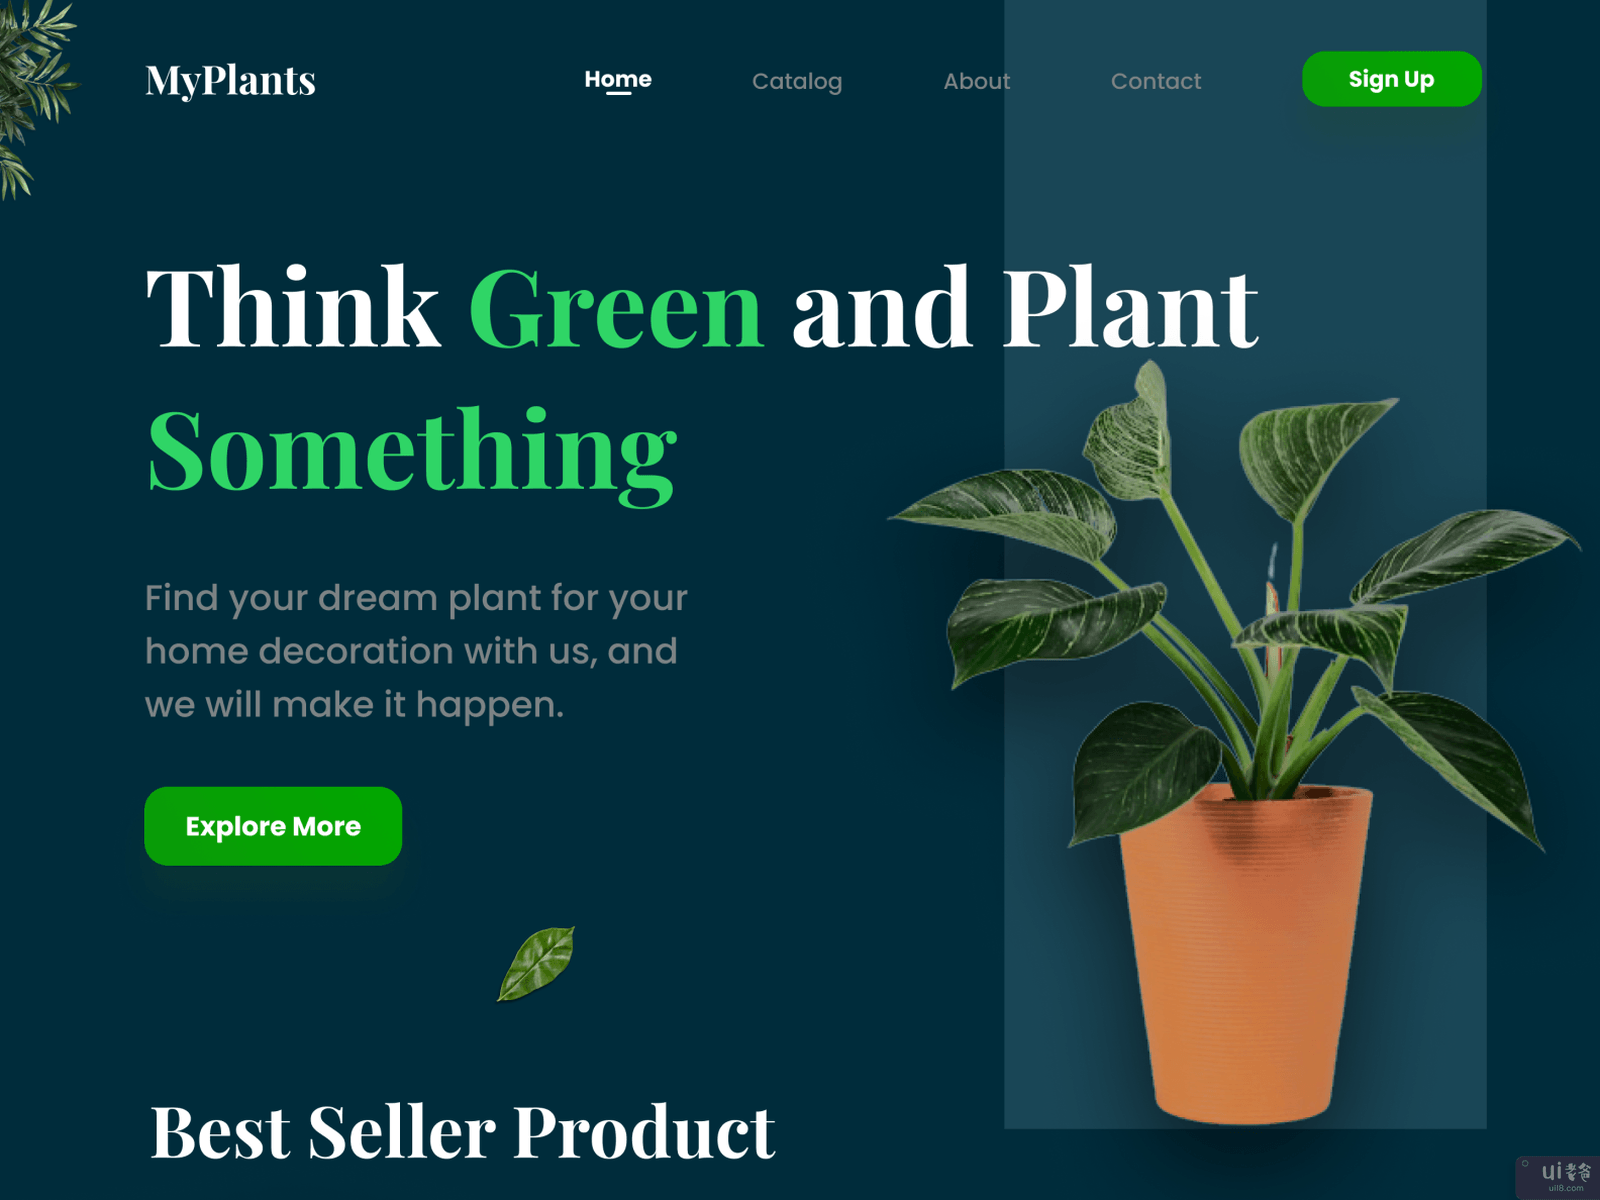 我的植物 - 植物登陆页(MyPlants - Plant Landing Page)插图1